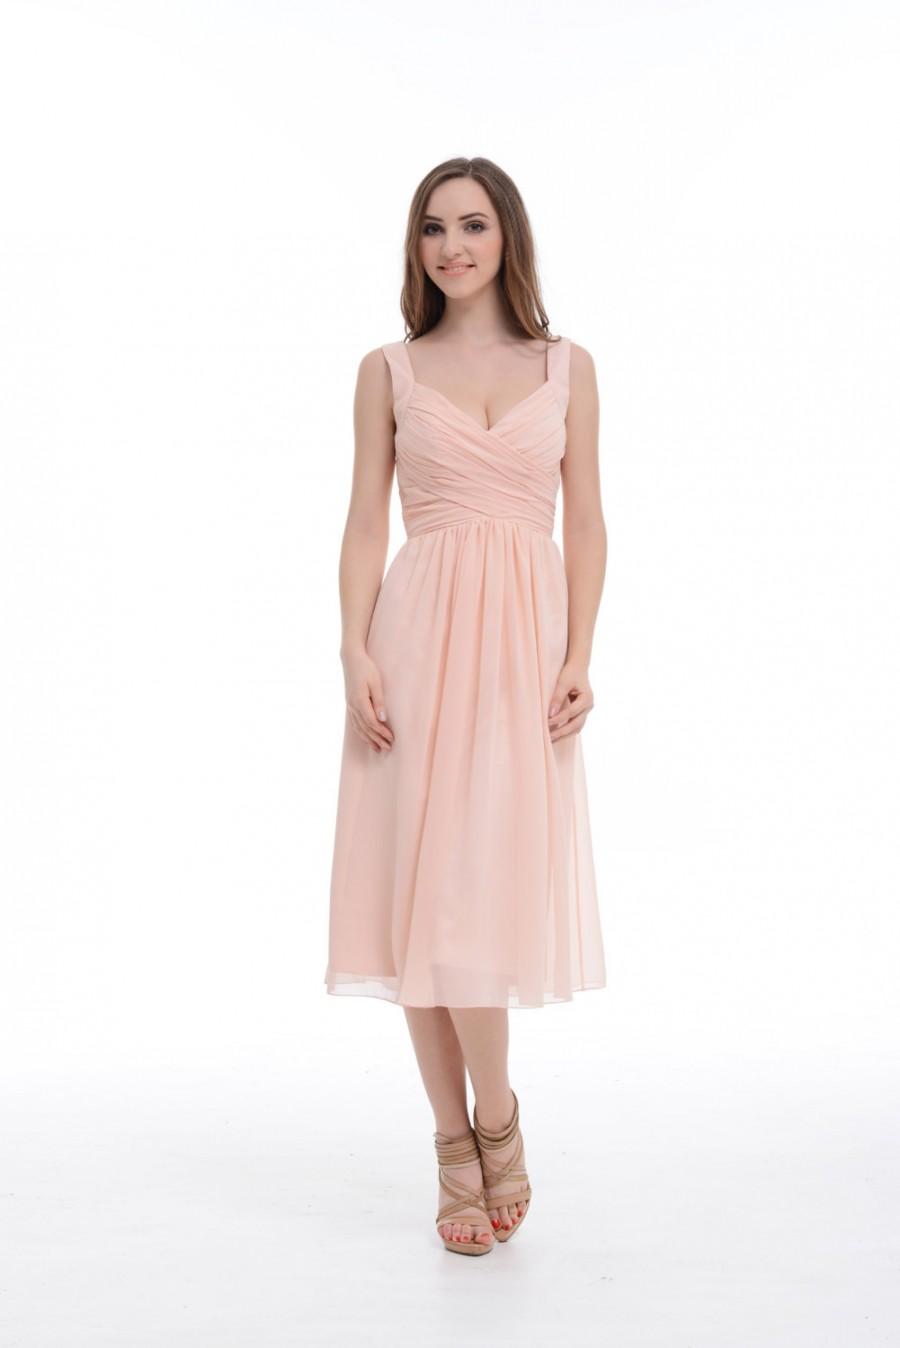 زفاف - Pearl Pink A-Line/Princess V-neck Tea-Length Spaghetti Straps Chiffon Bridesmaid Dress/Homecoming Dress/Prom Dress With Ruffle